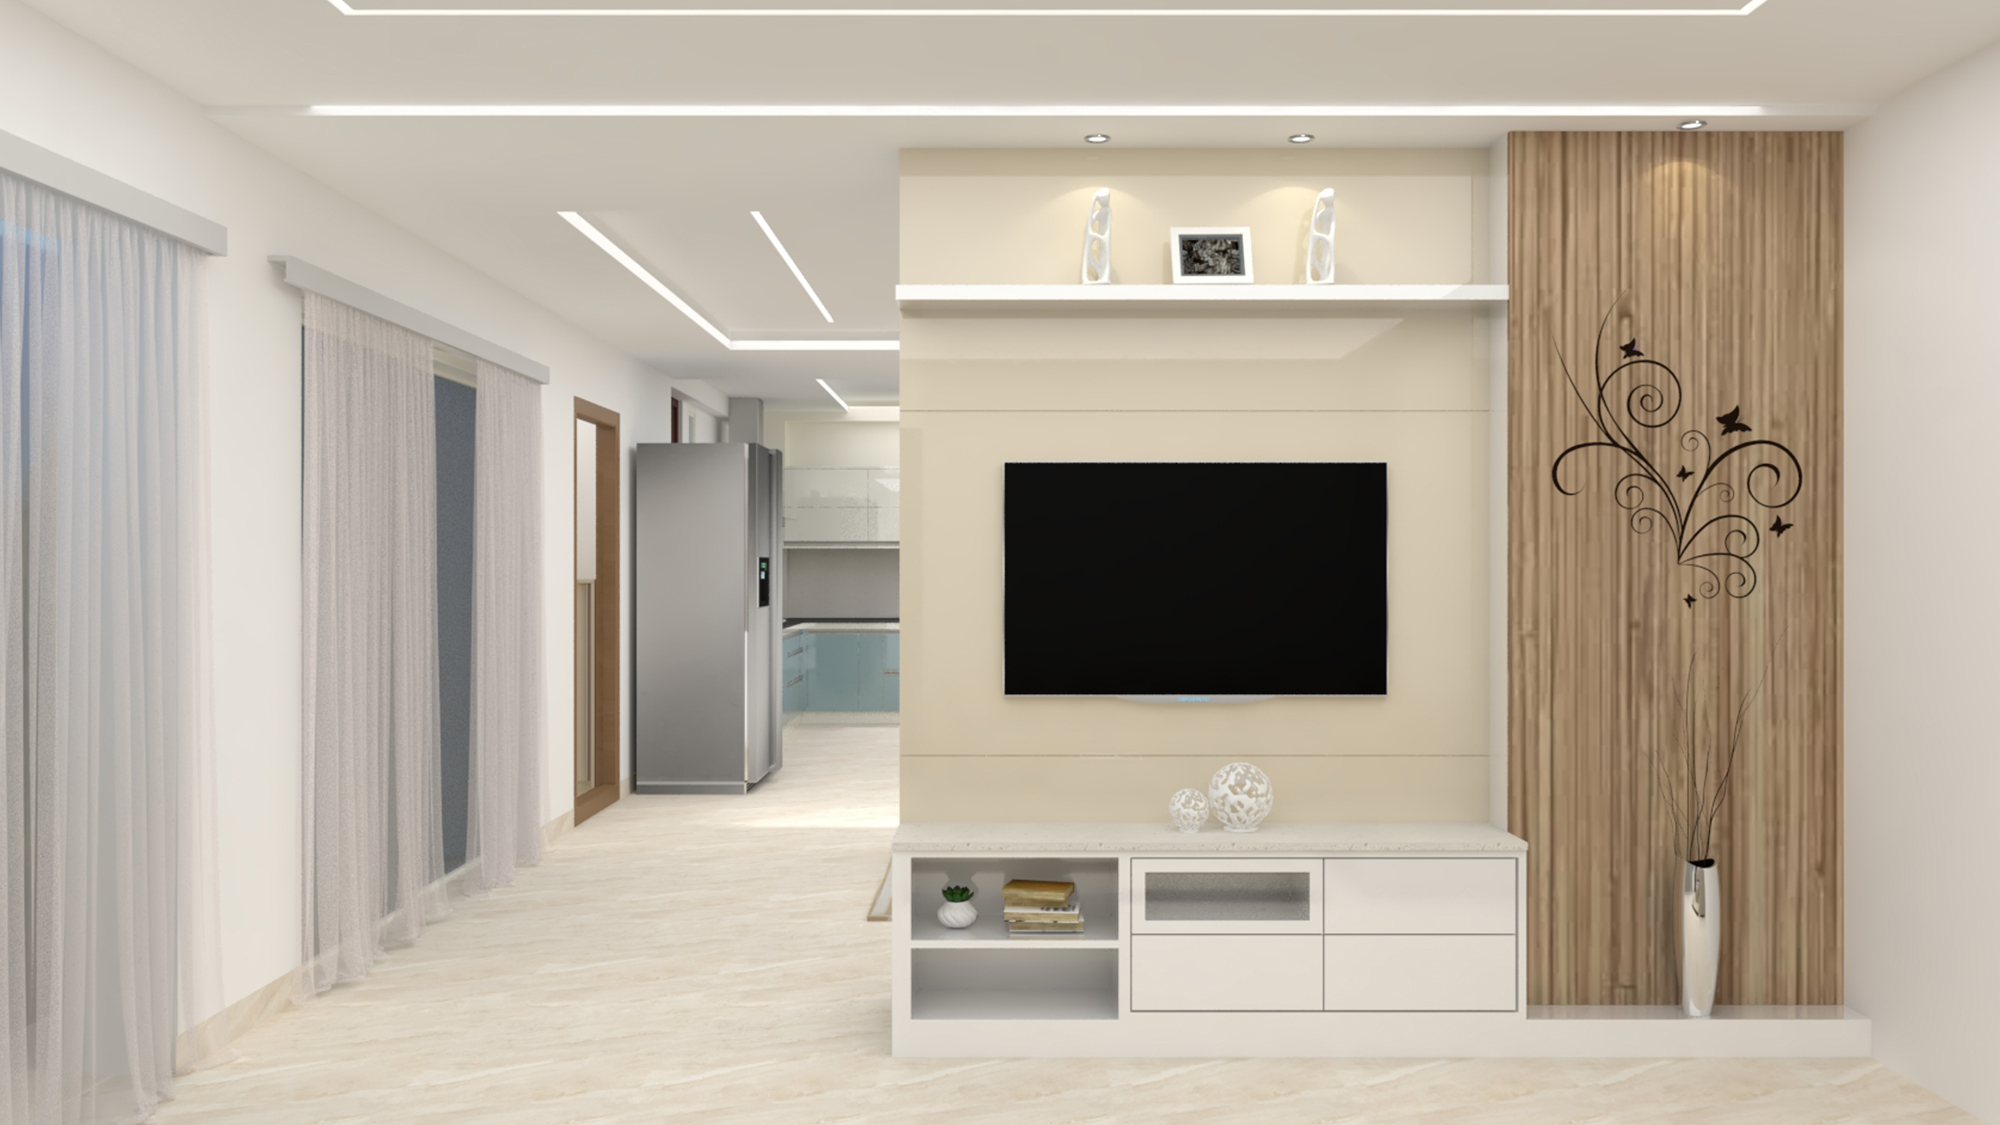 V Cabinet Design and ideas - Domineer interior studio